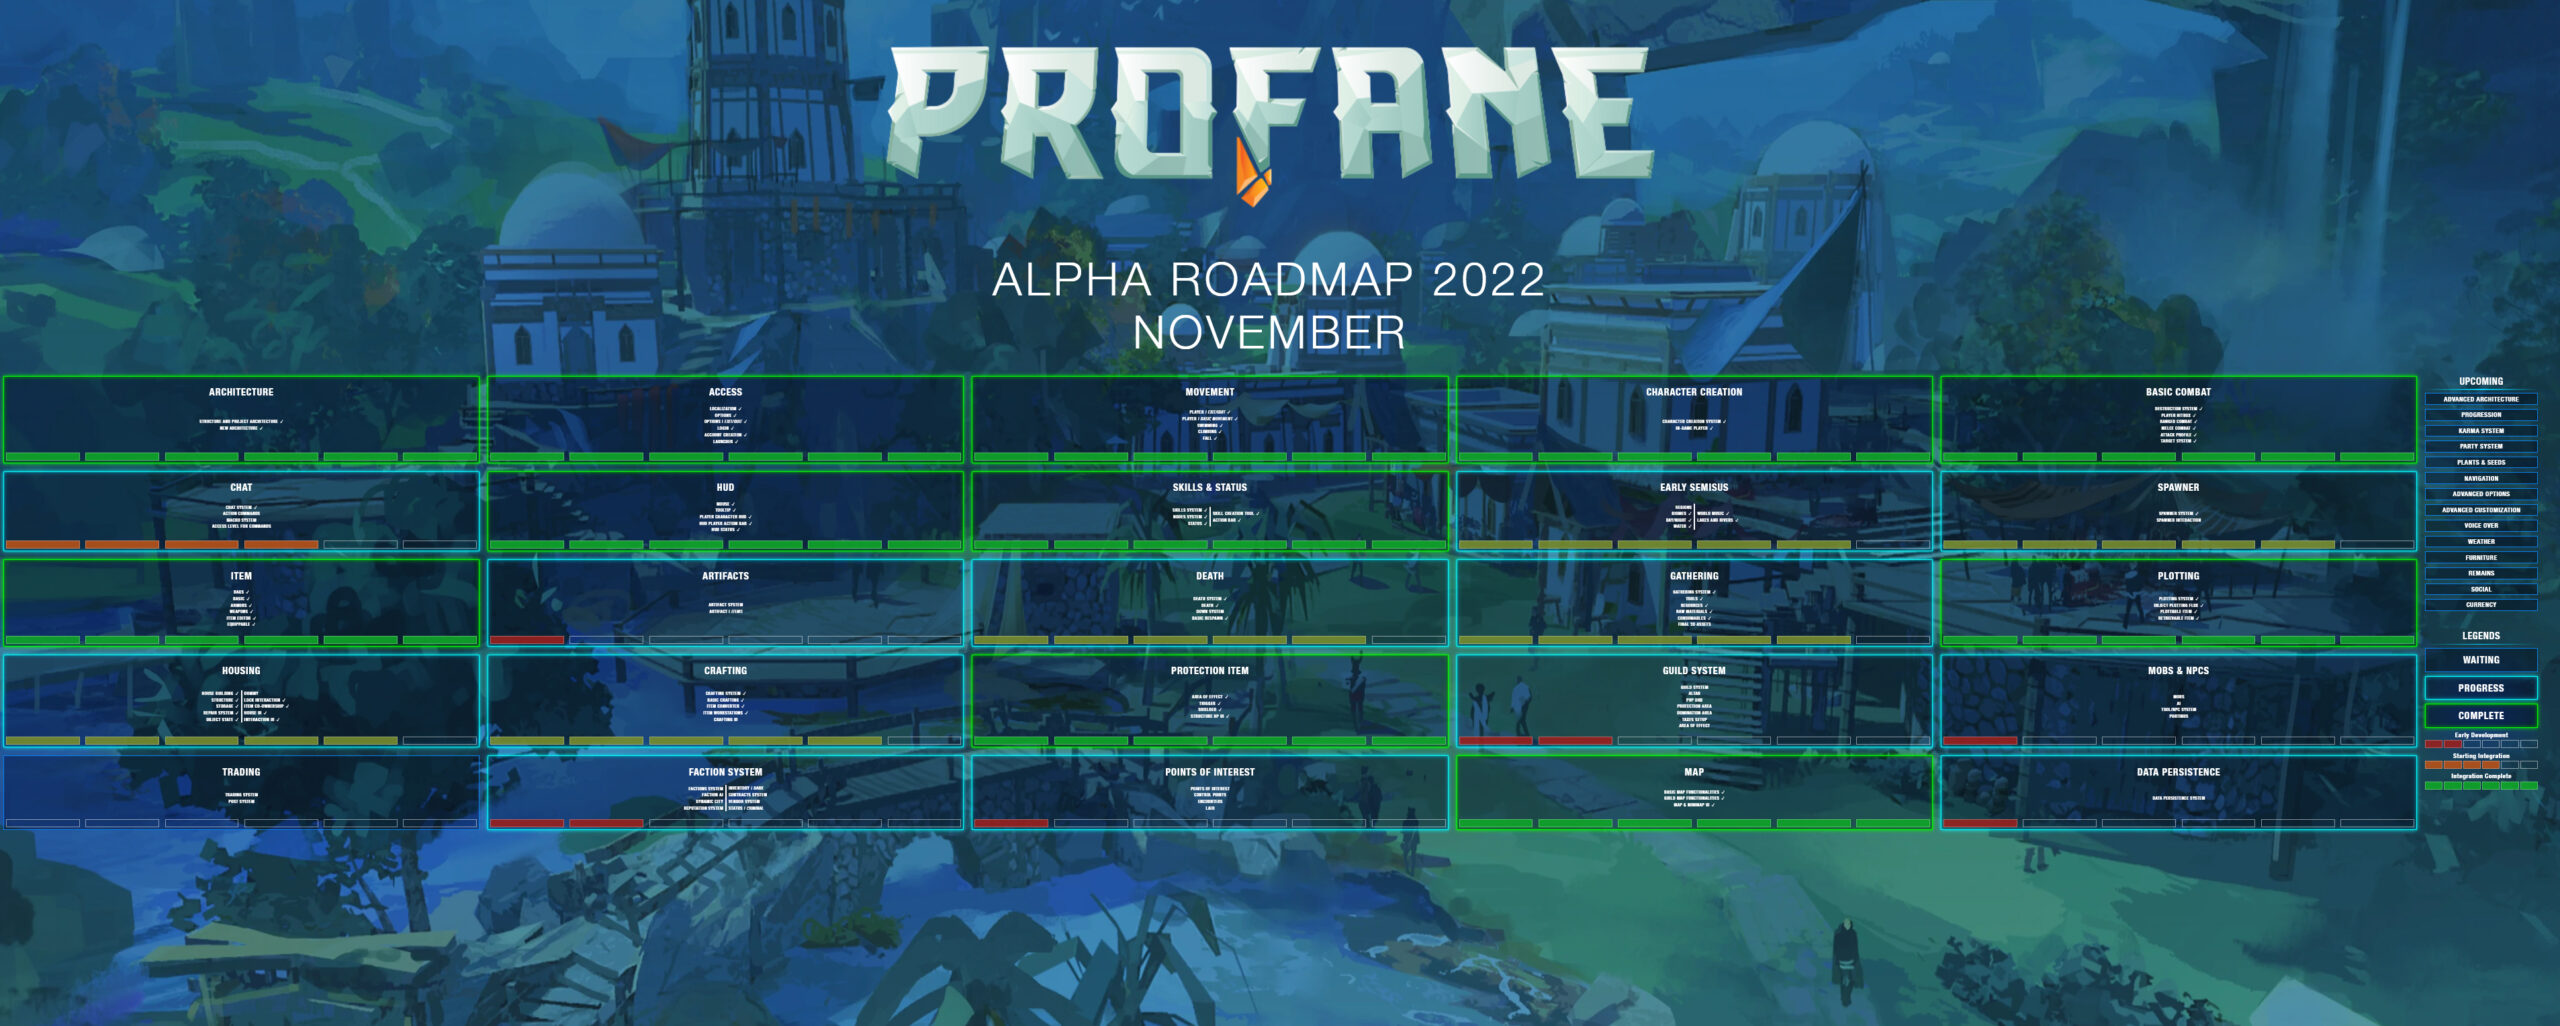 Profane Posts November Roadmap Showing Progress to Several Systems 13